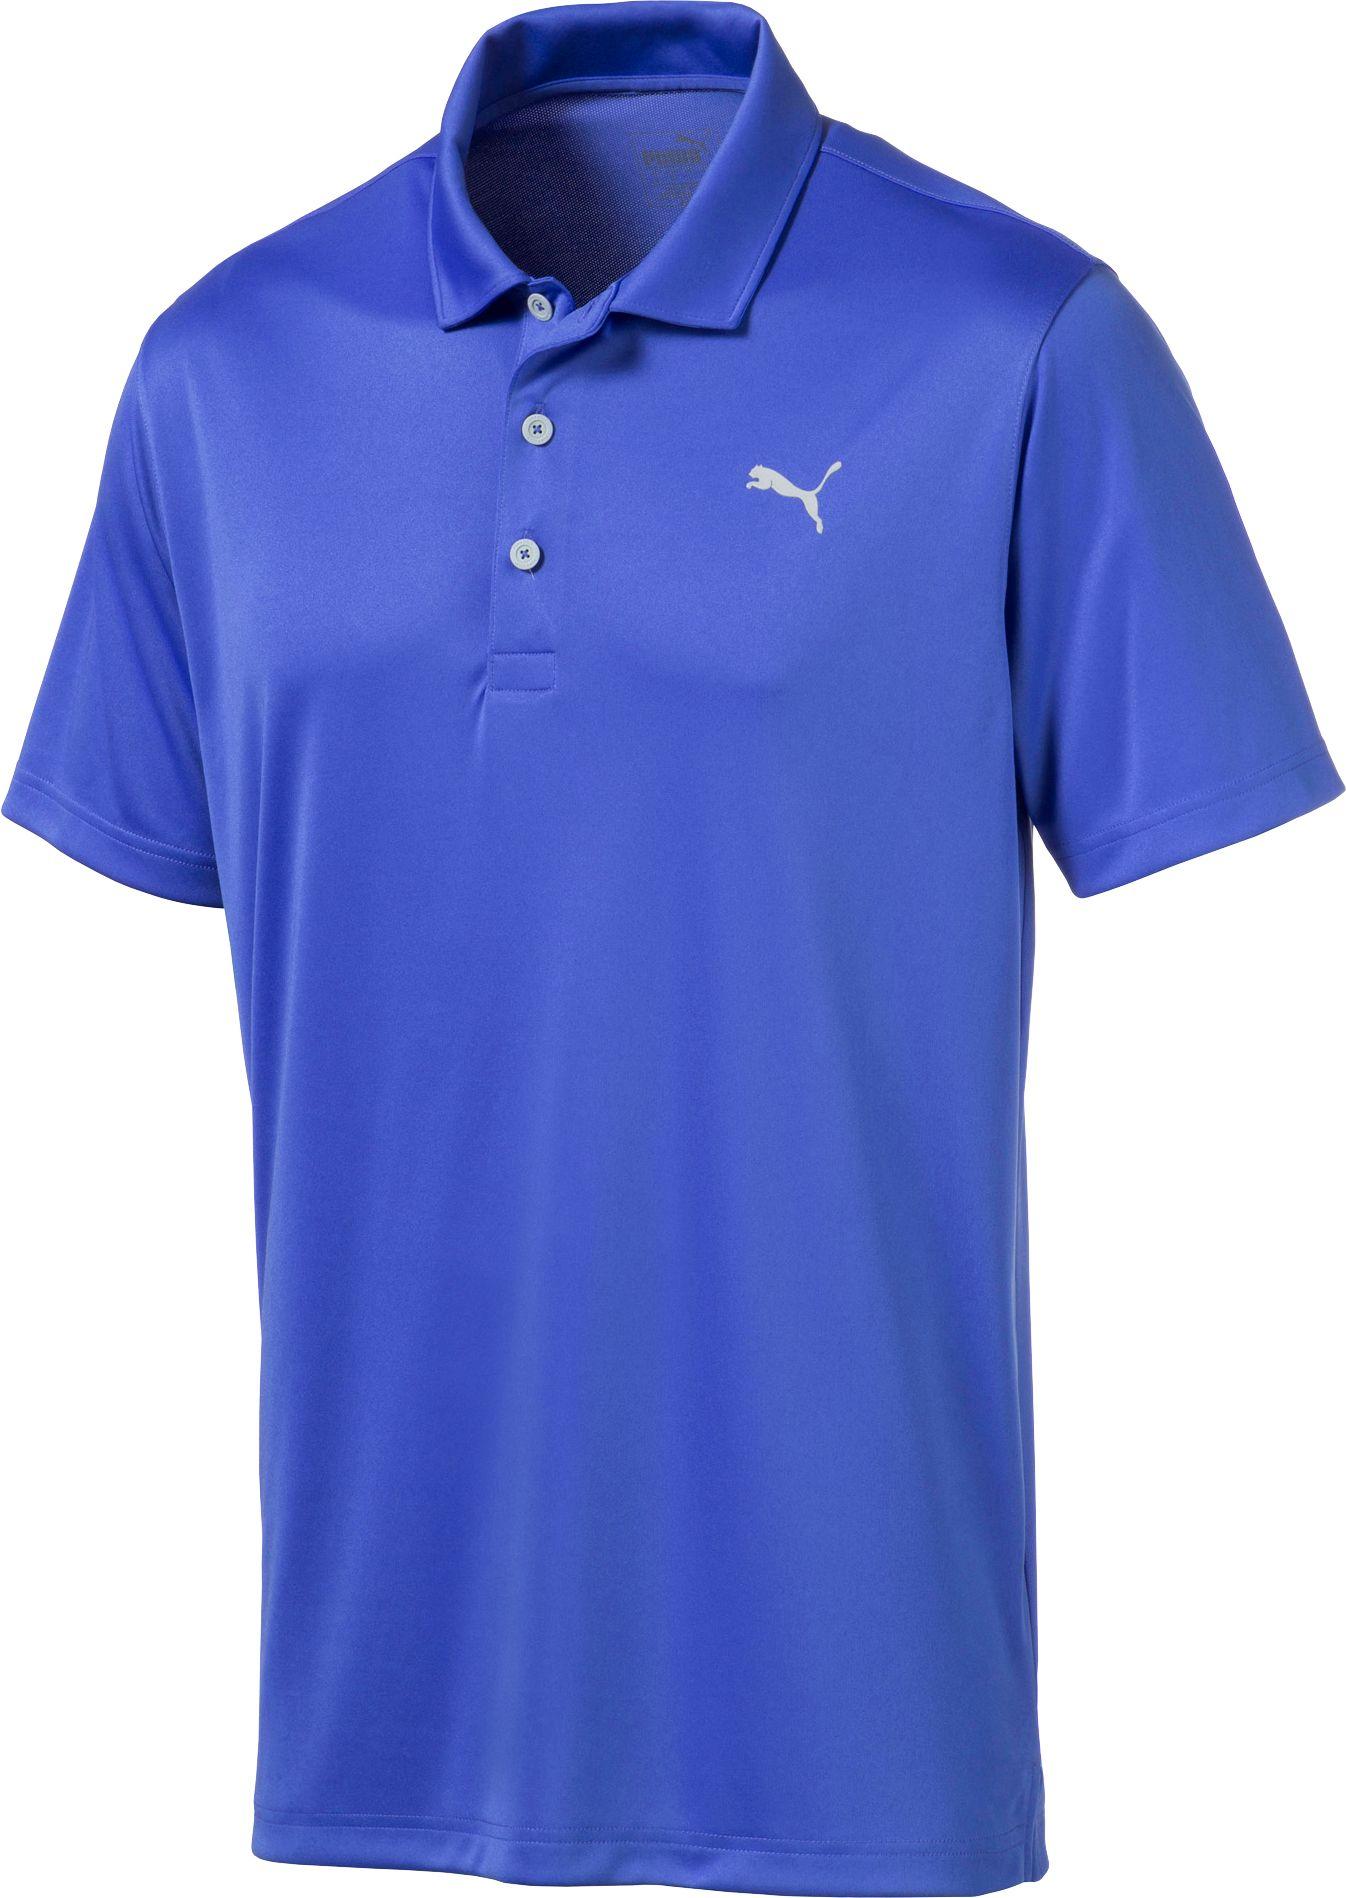 PUMA Rotation Golf Polo in Blue for Men - Lyst